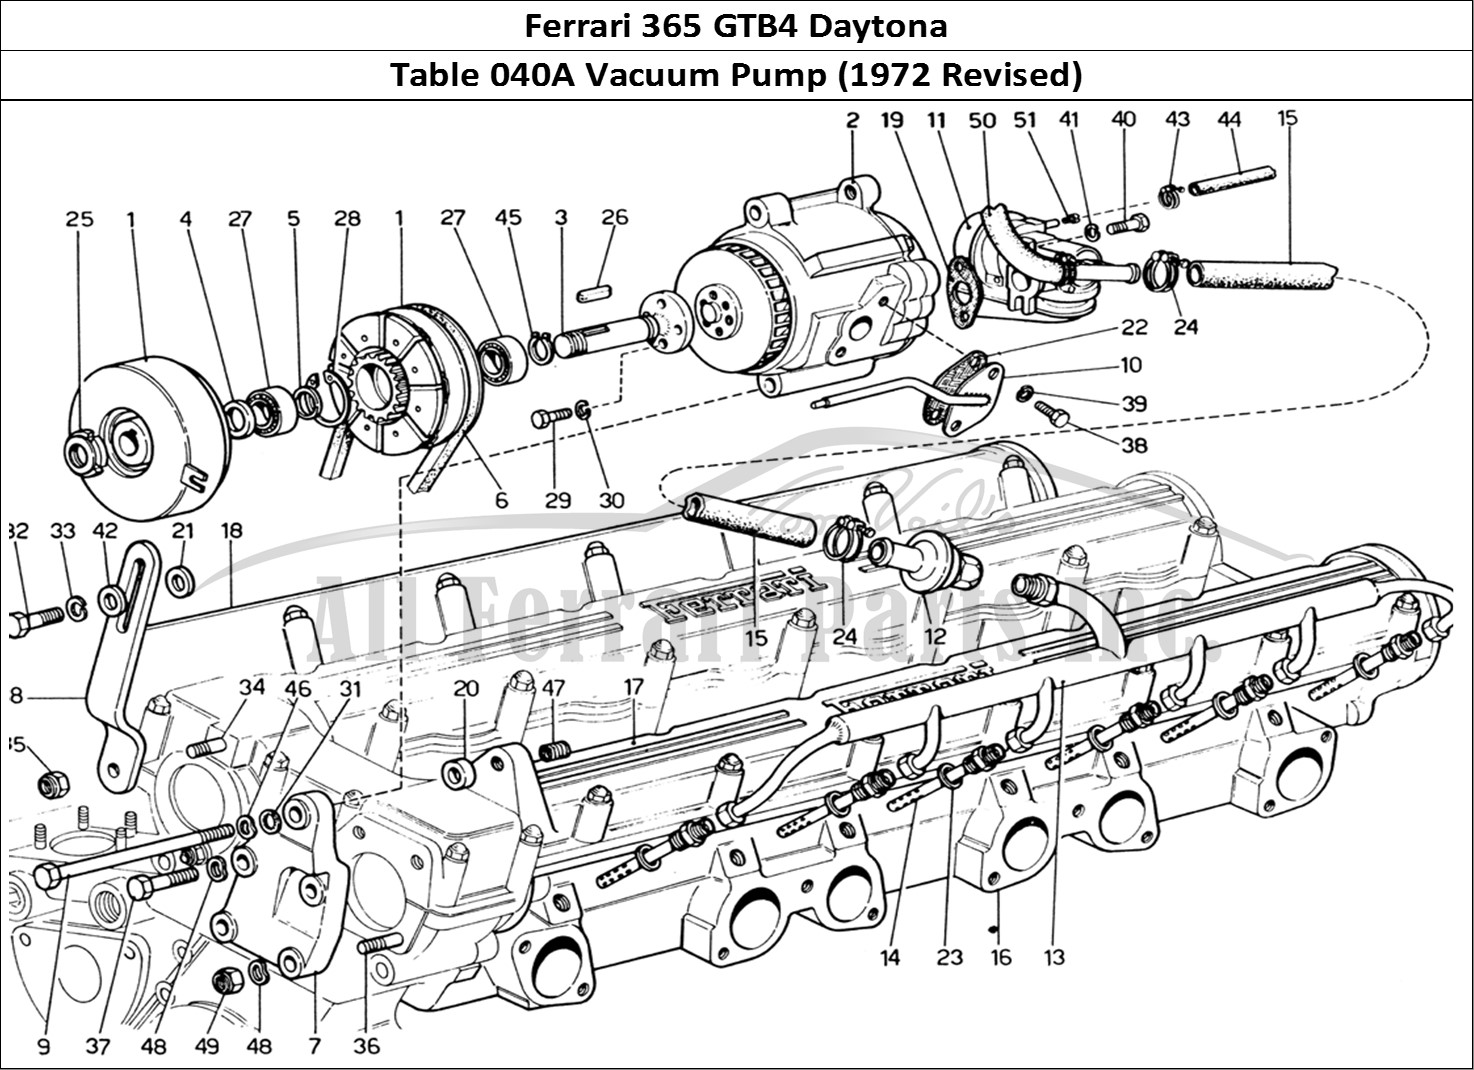 Ferrari Parts Ferrari 365 GTB4 Daytona (1969) Page 040 Vacuum Pump (1972 Revisio